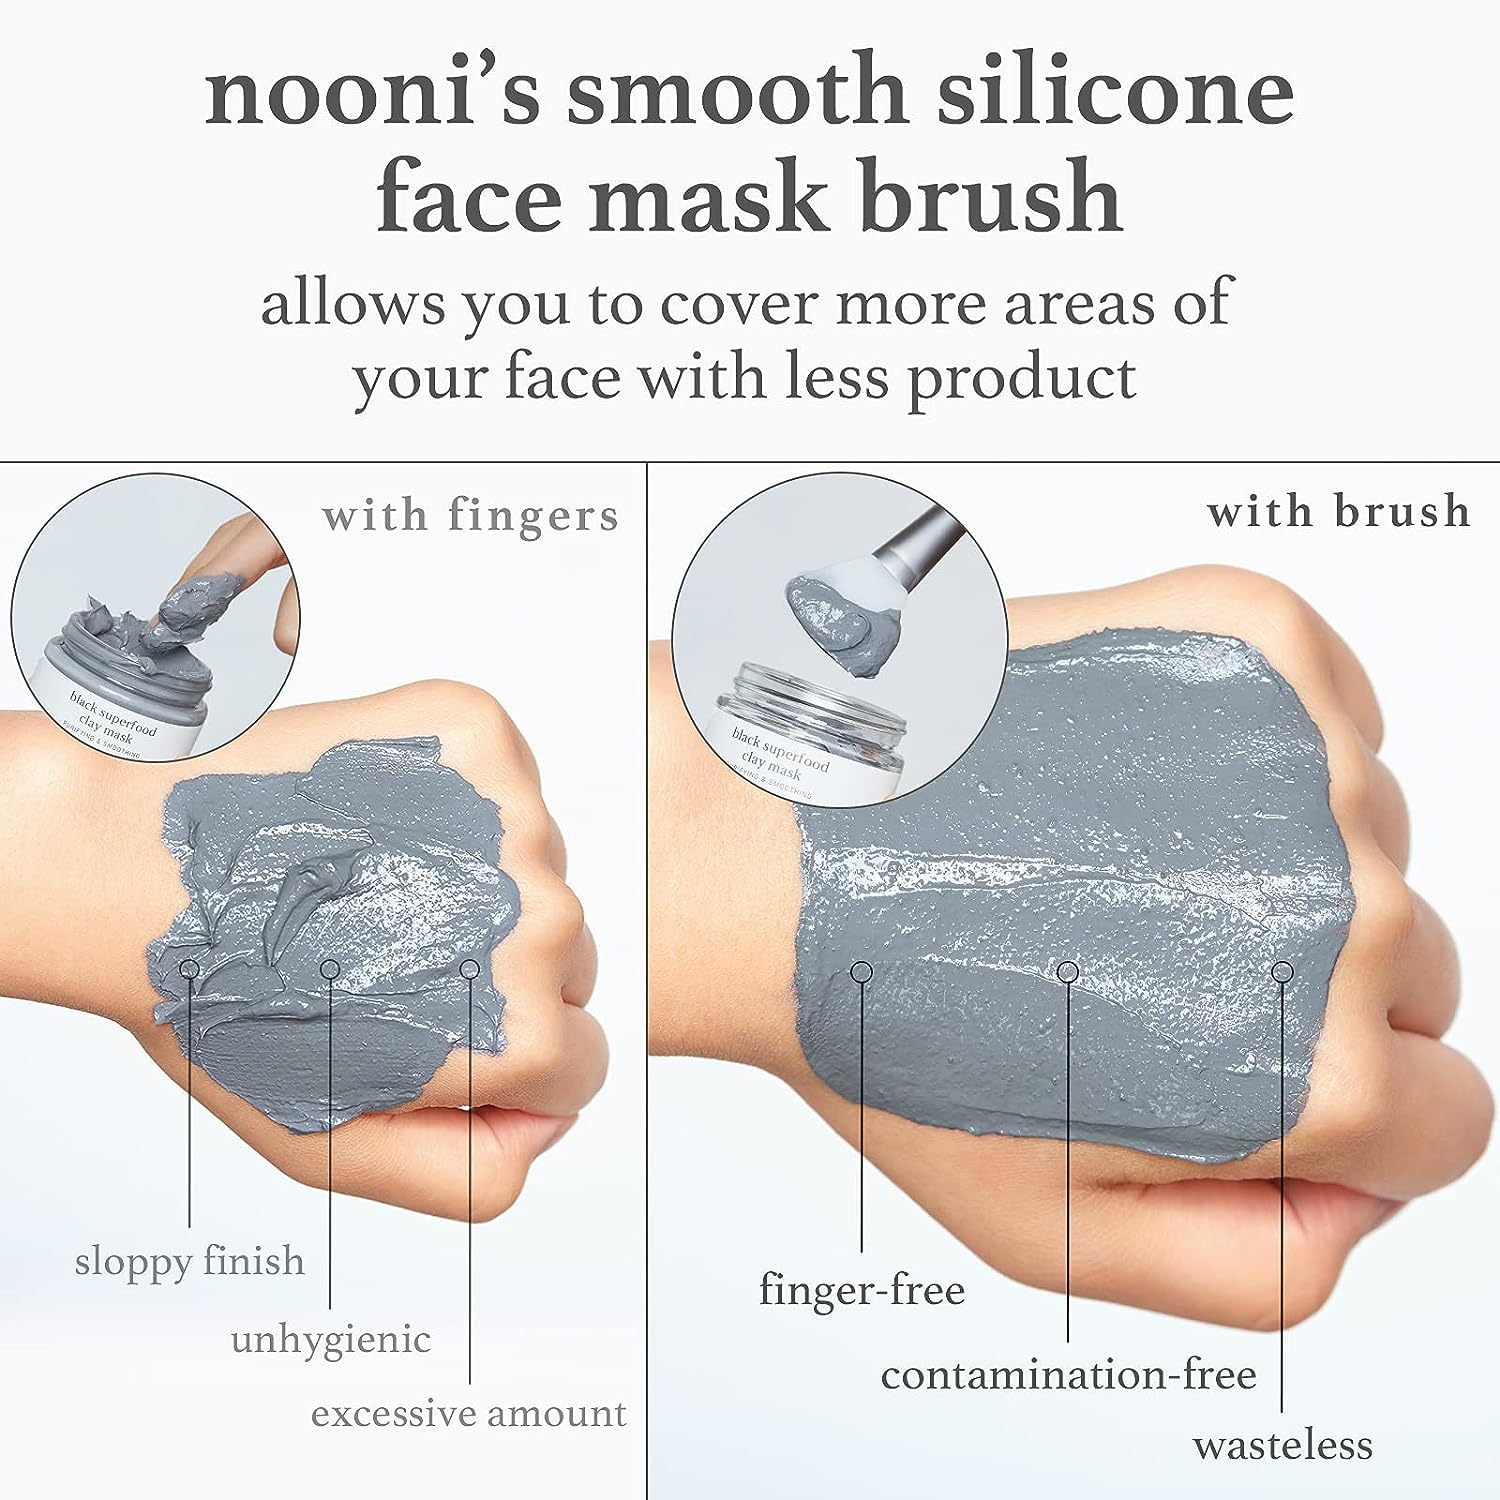 smooth silicone face mask brush